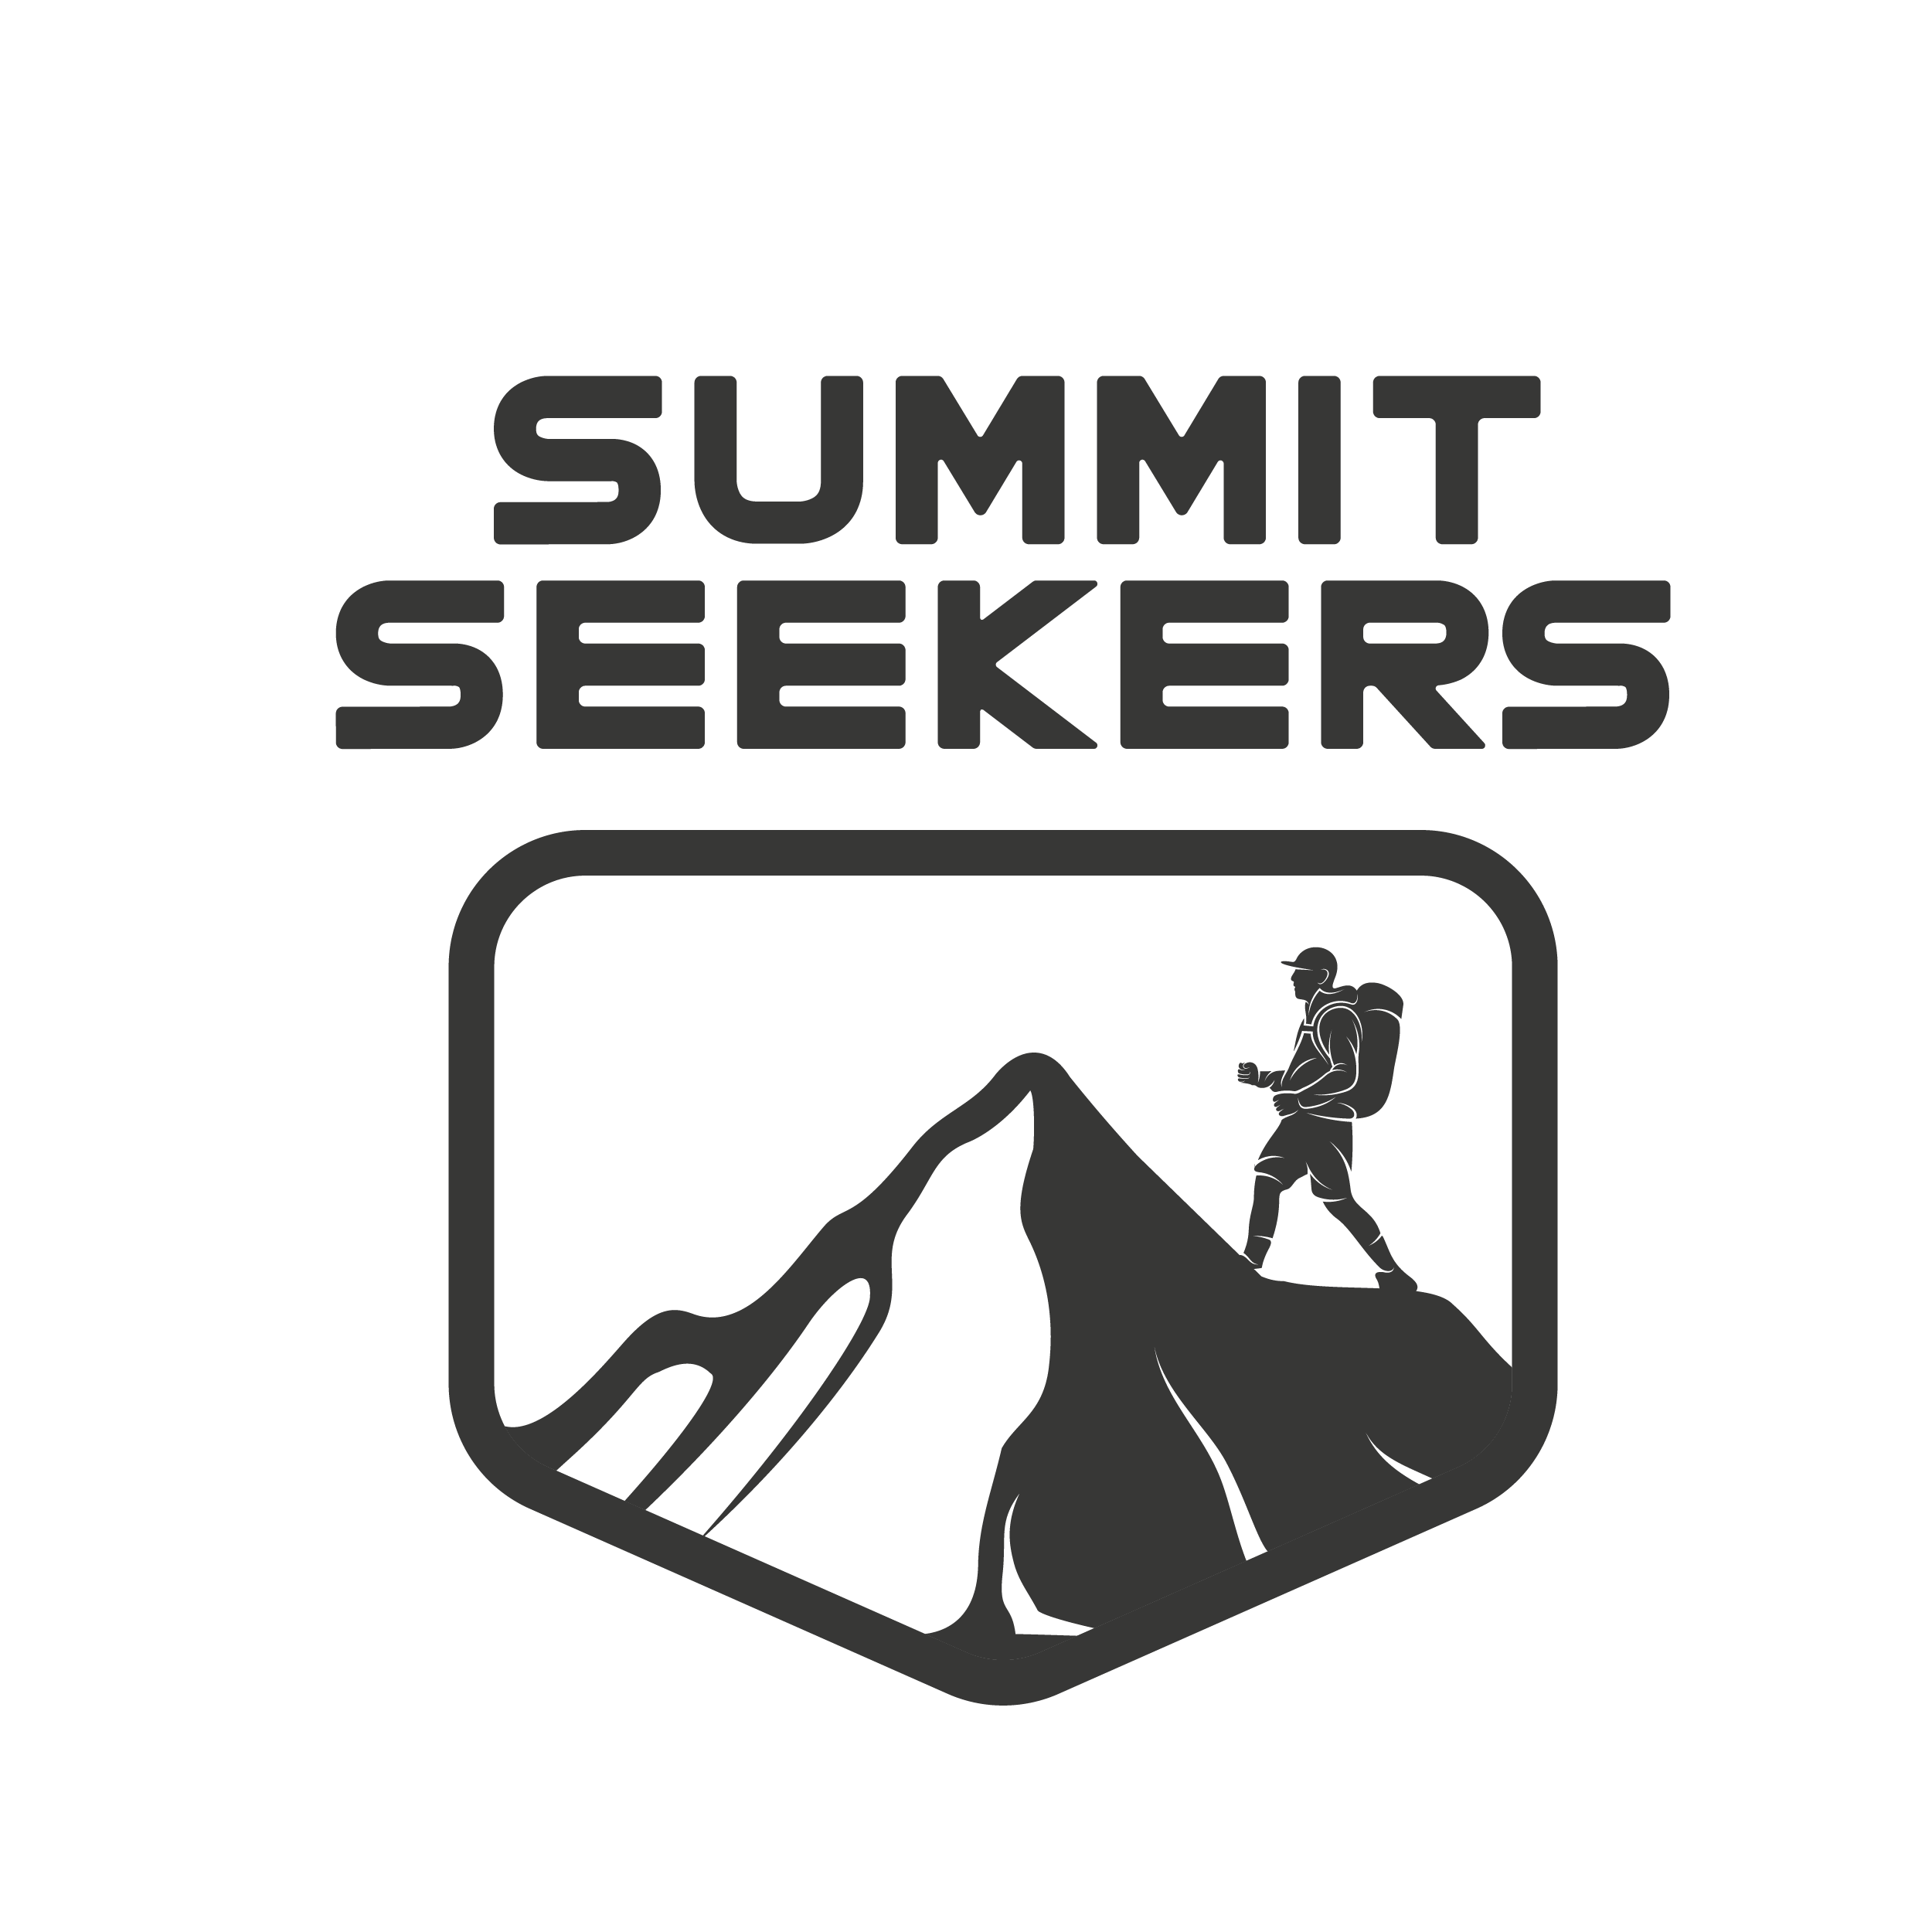 Summit Seekers Chalk